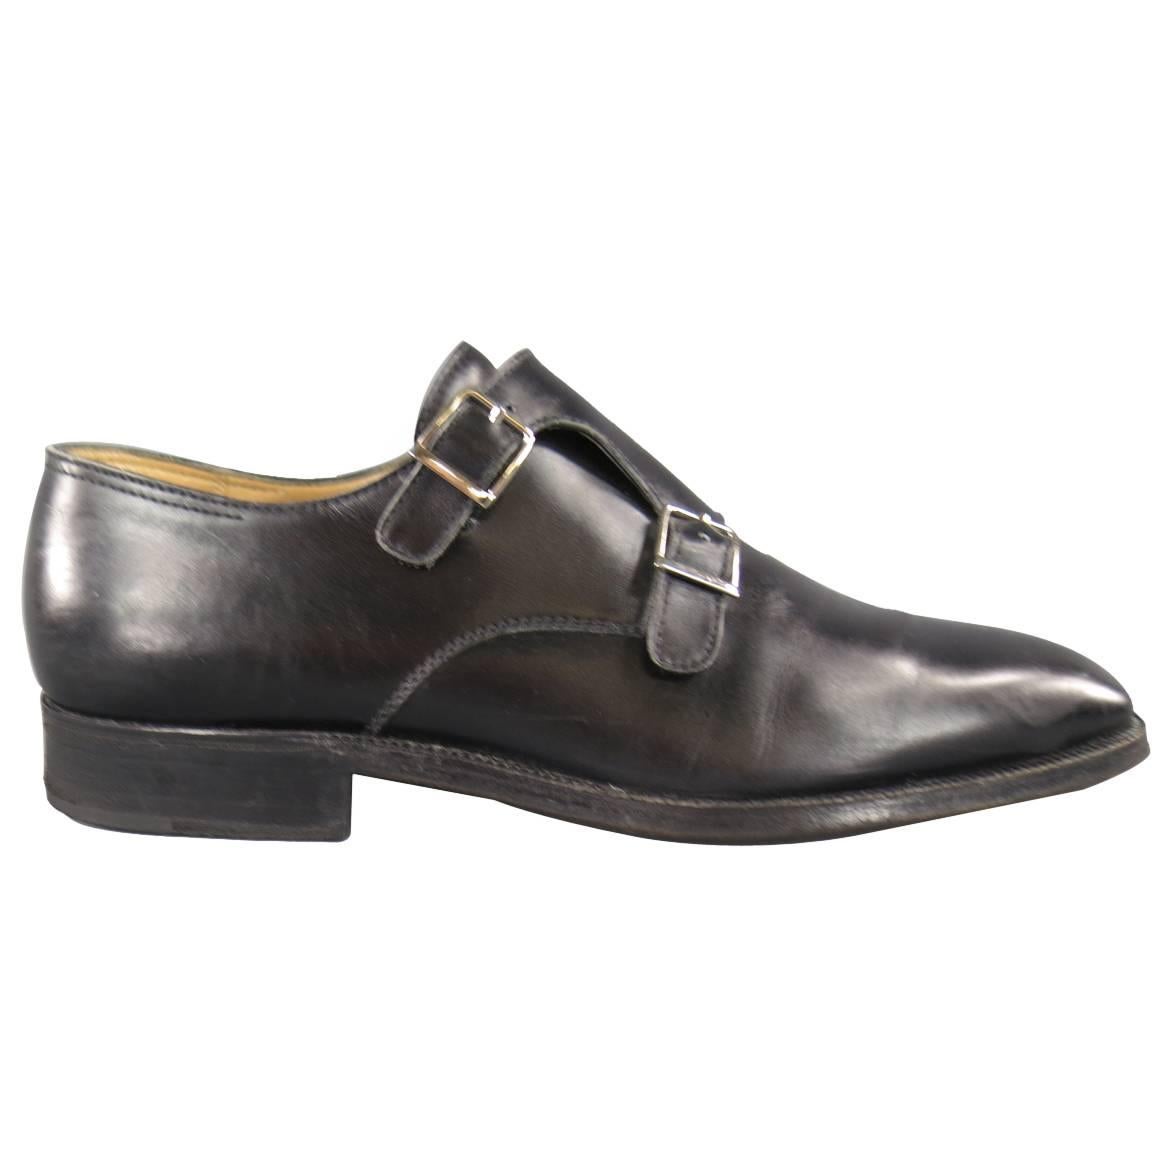 GRAVATI for Wilkes Bashford Size 8.5 Black Leather Monk Strap Dress Shoes